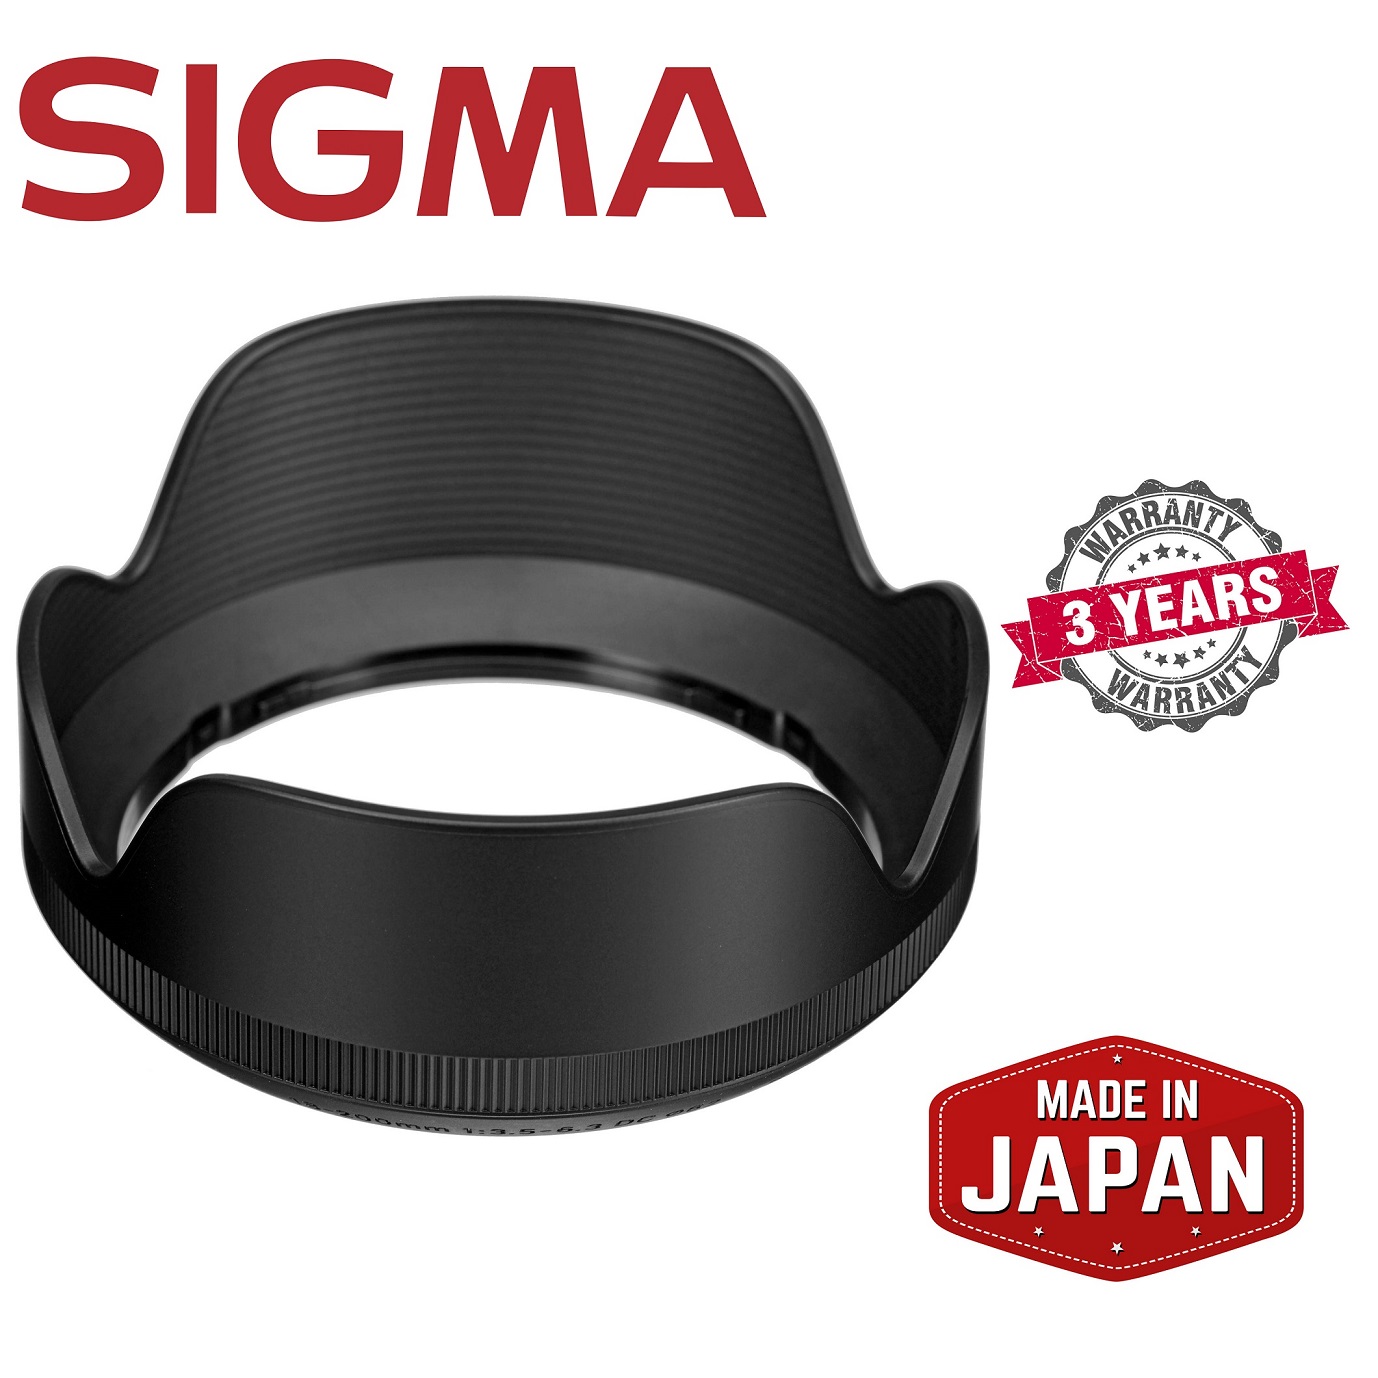 Sigma LH676-01 Lens Hood For 18-200mm F3.5-6.3 DC OS Macro HSM Lens